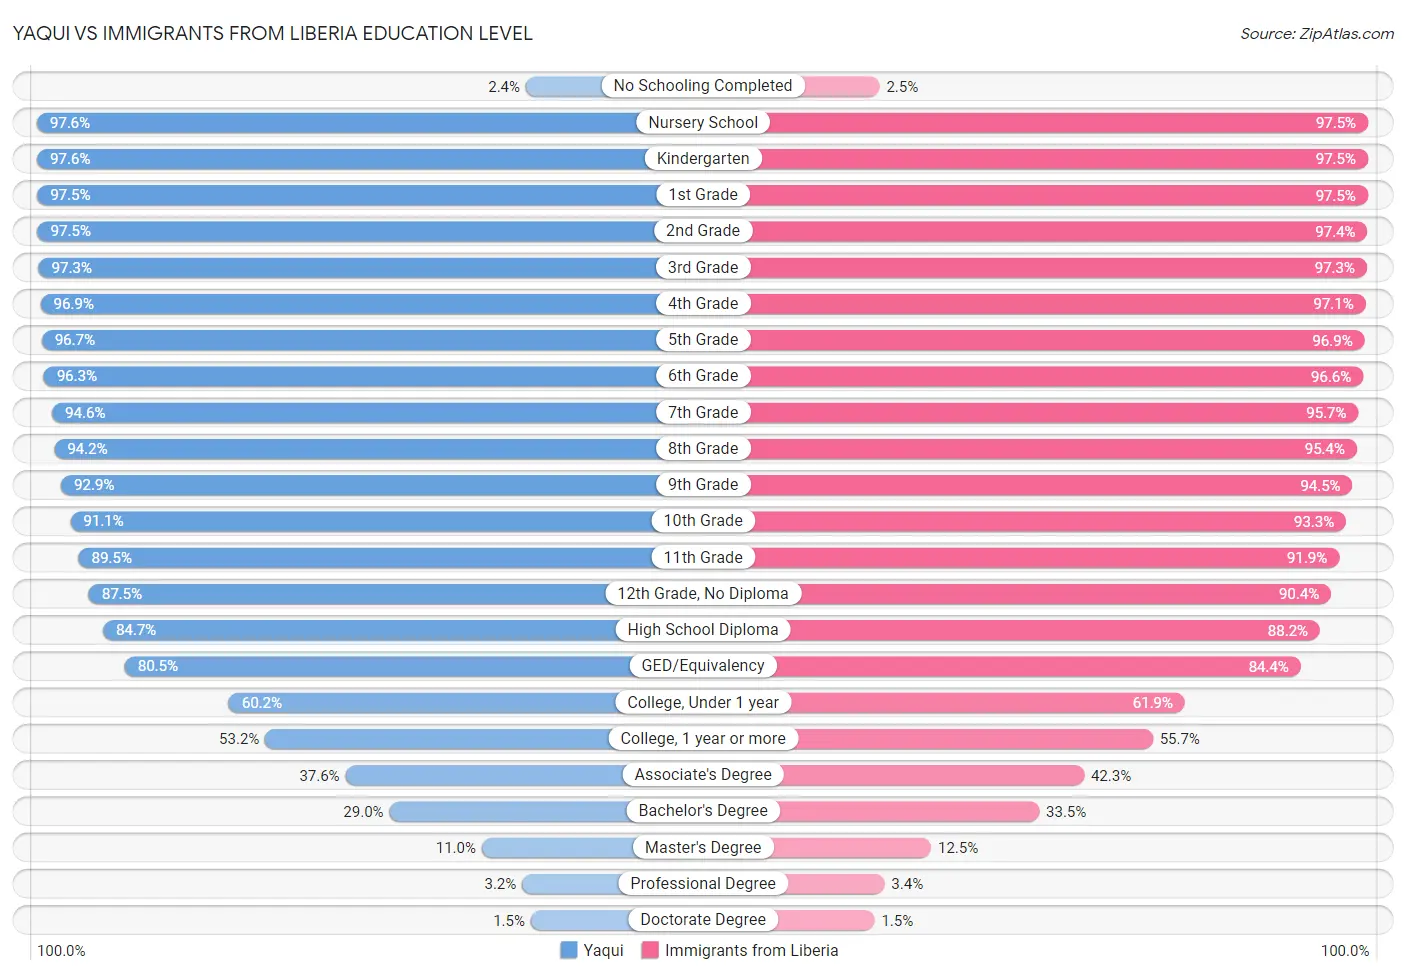 Yaqui vs Immigrants from Liberia Education Level